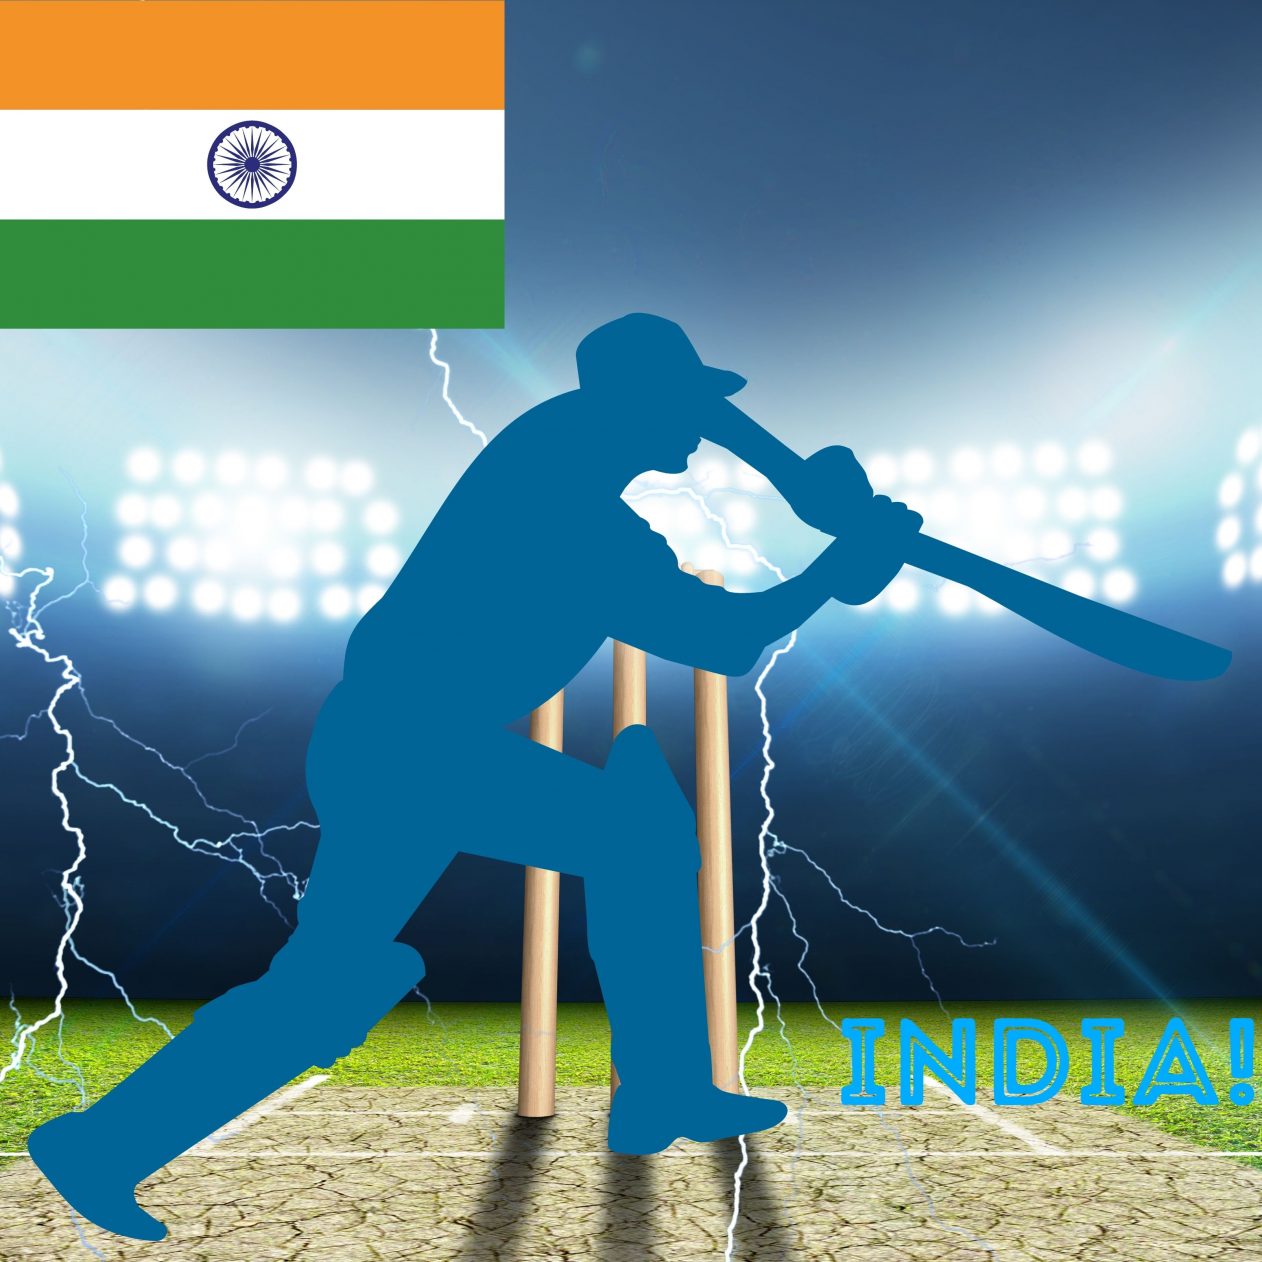 1262x1262 Parallax wallpaper 4k India Cricket Stadium iPad Wallpaper 1262x1262 pixels resolution